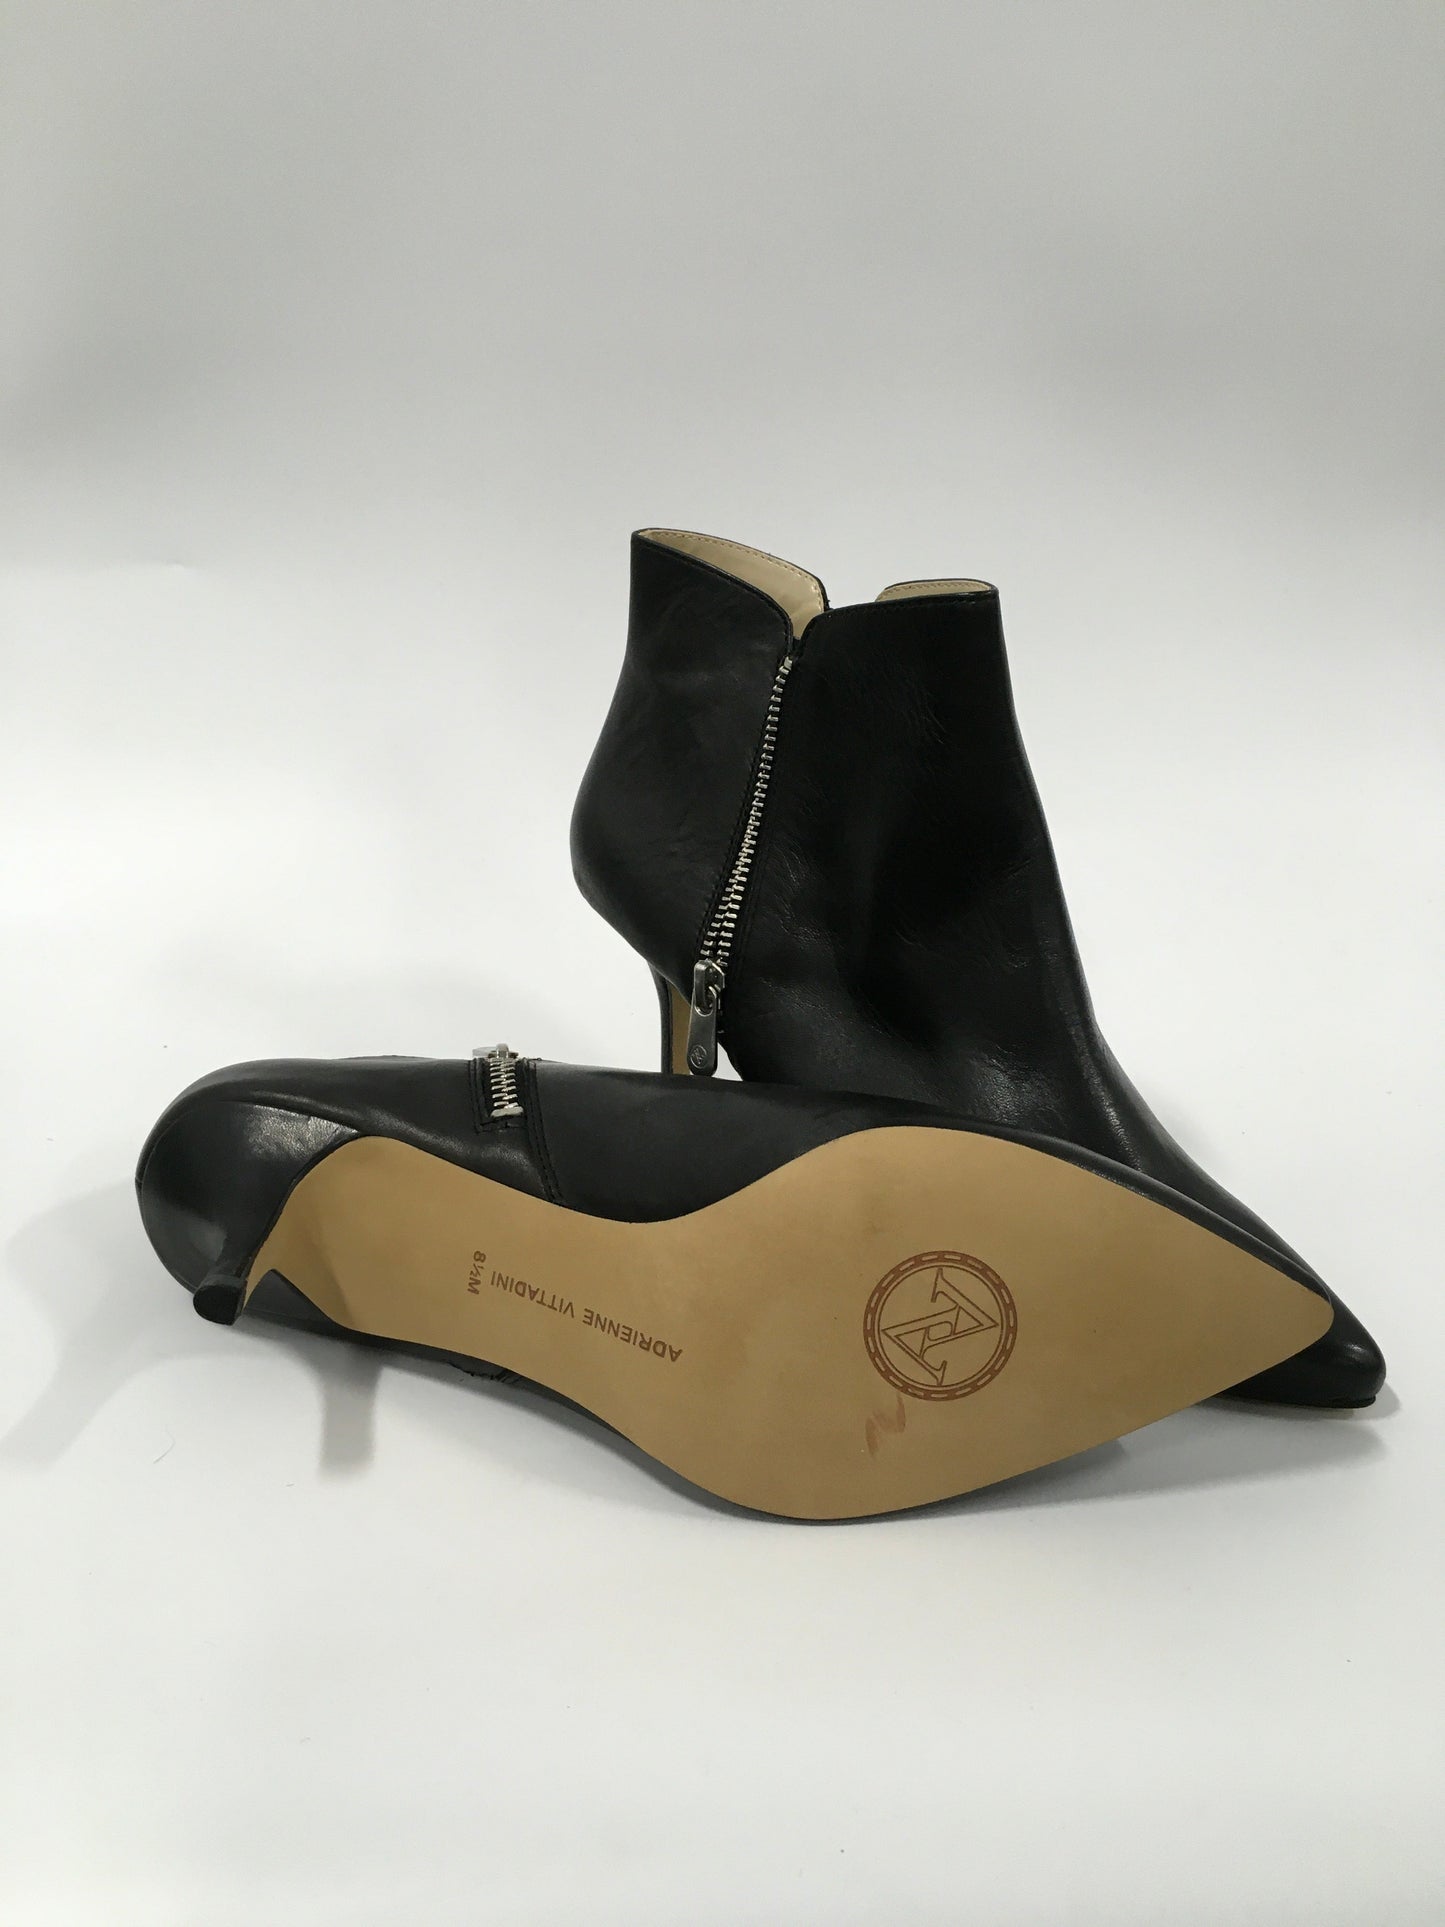 Black Boots Ankle Heels Adrienne Vittadini, Size 8.5